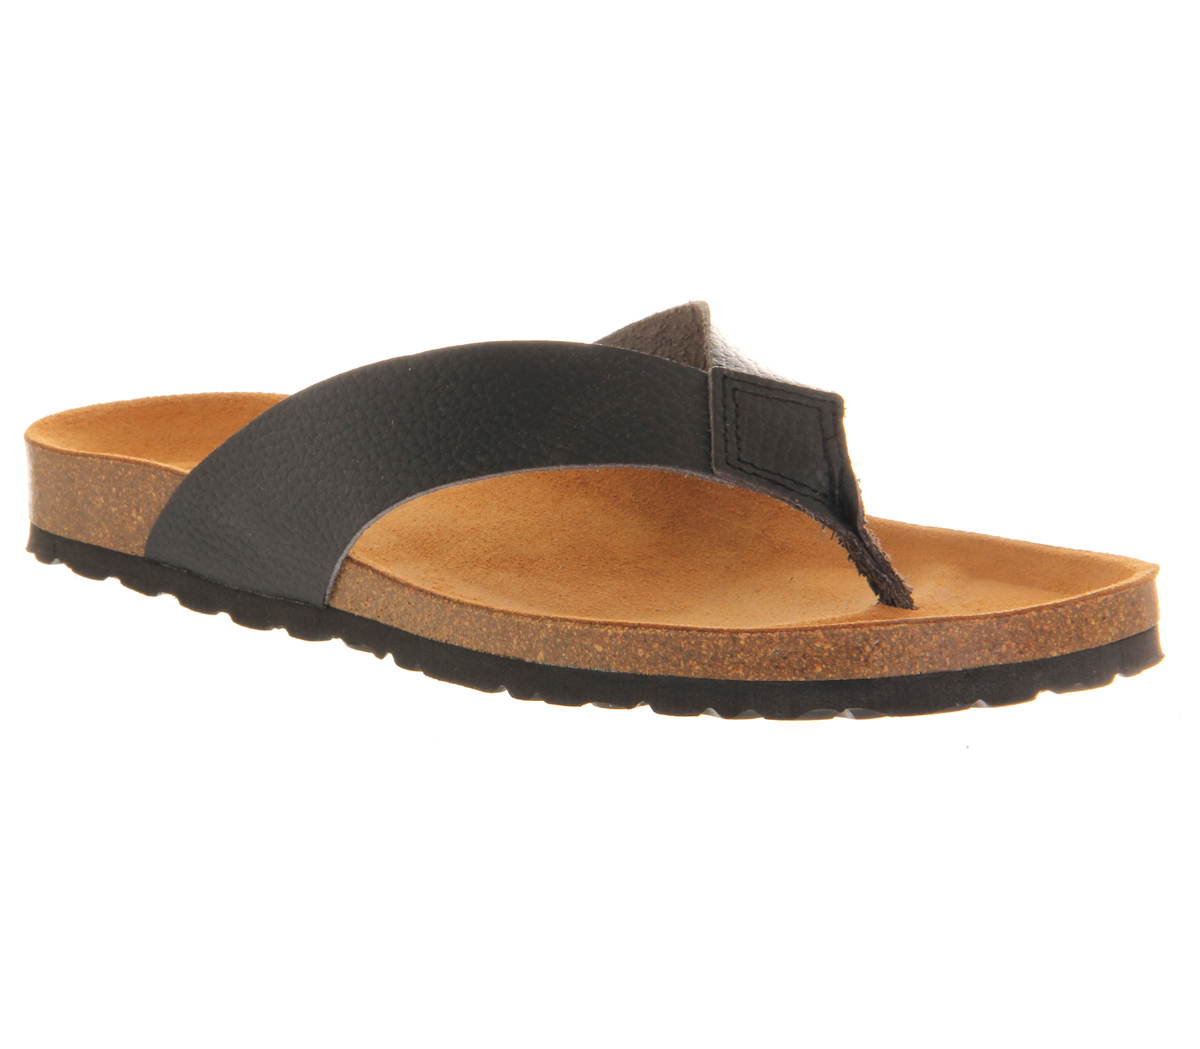 OFFICEThong SandalsBlack Leather